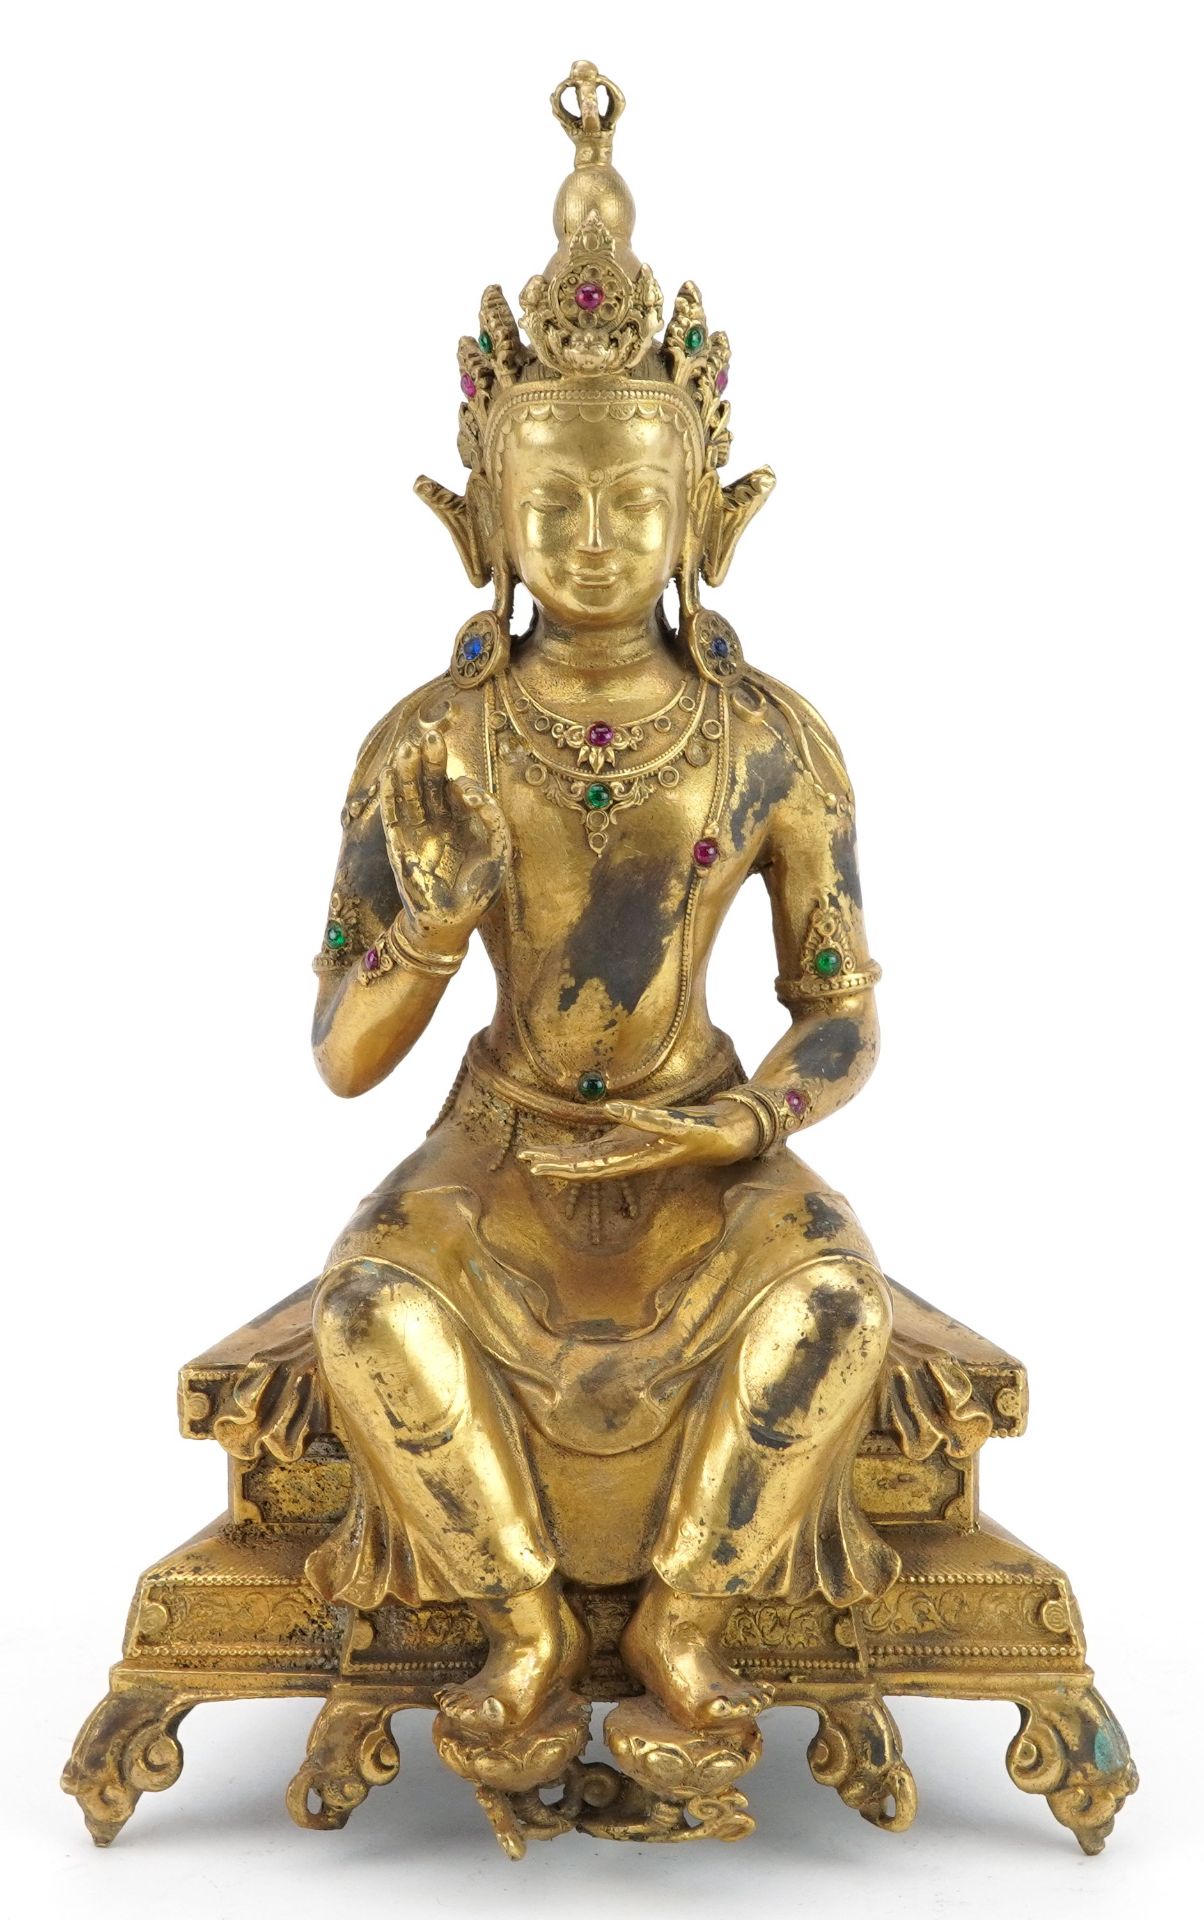 Chino Tibetan jewelled gilt bronze figure of seated Buddha, 24cm high : For further information on